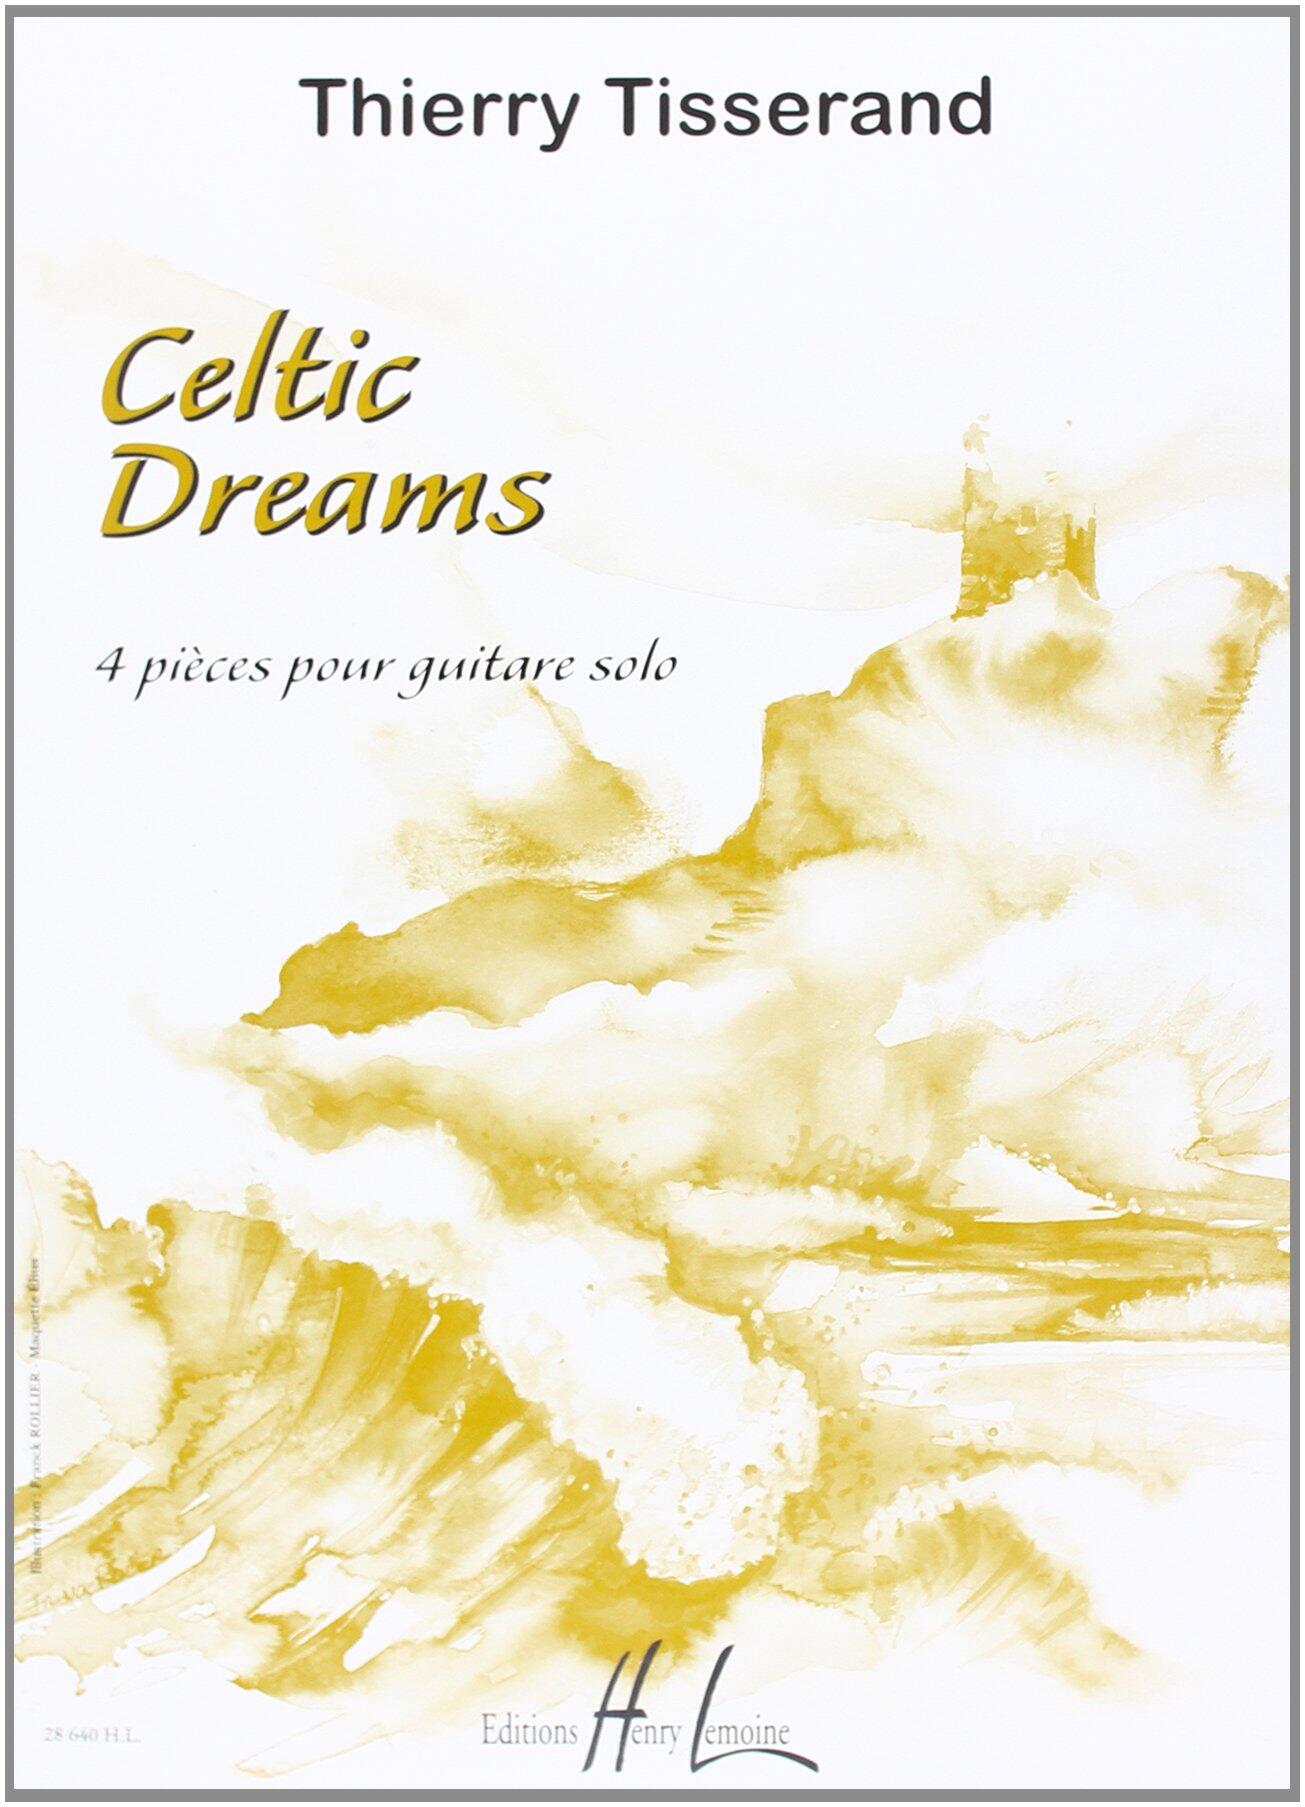 Celtic dreams TISSERAND Thierry : photo 1